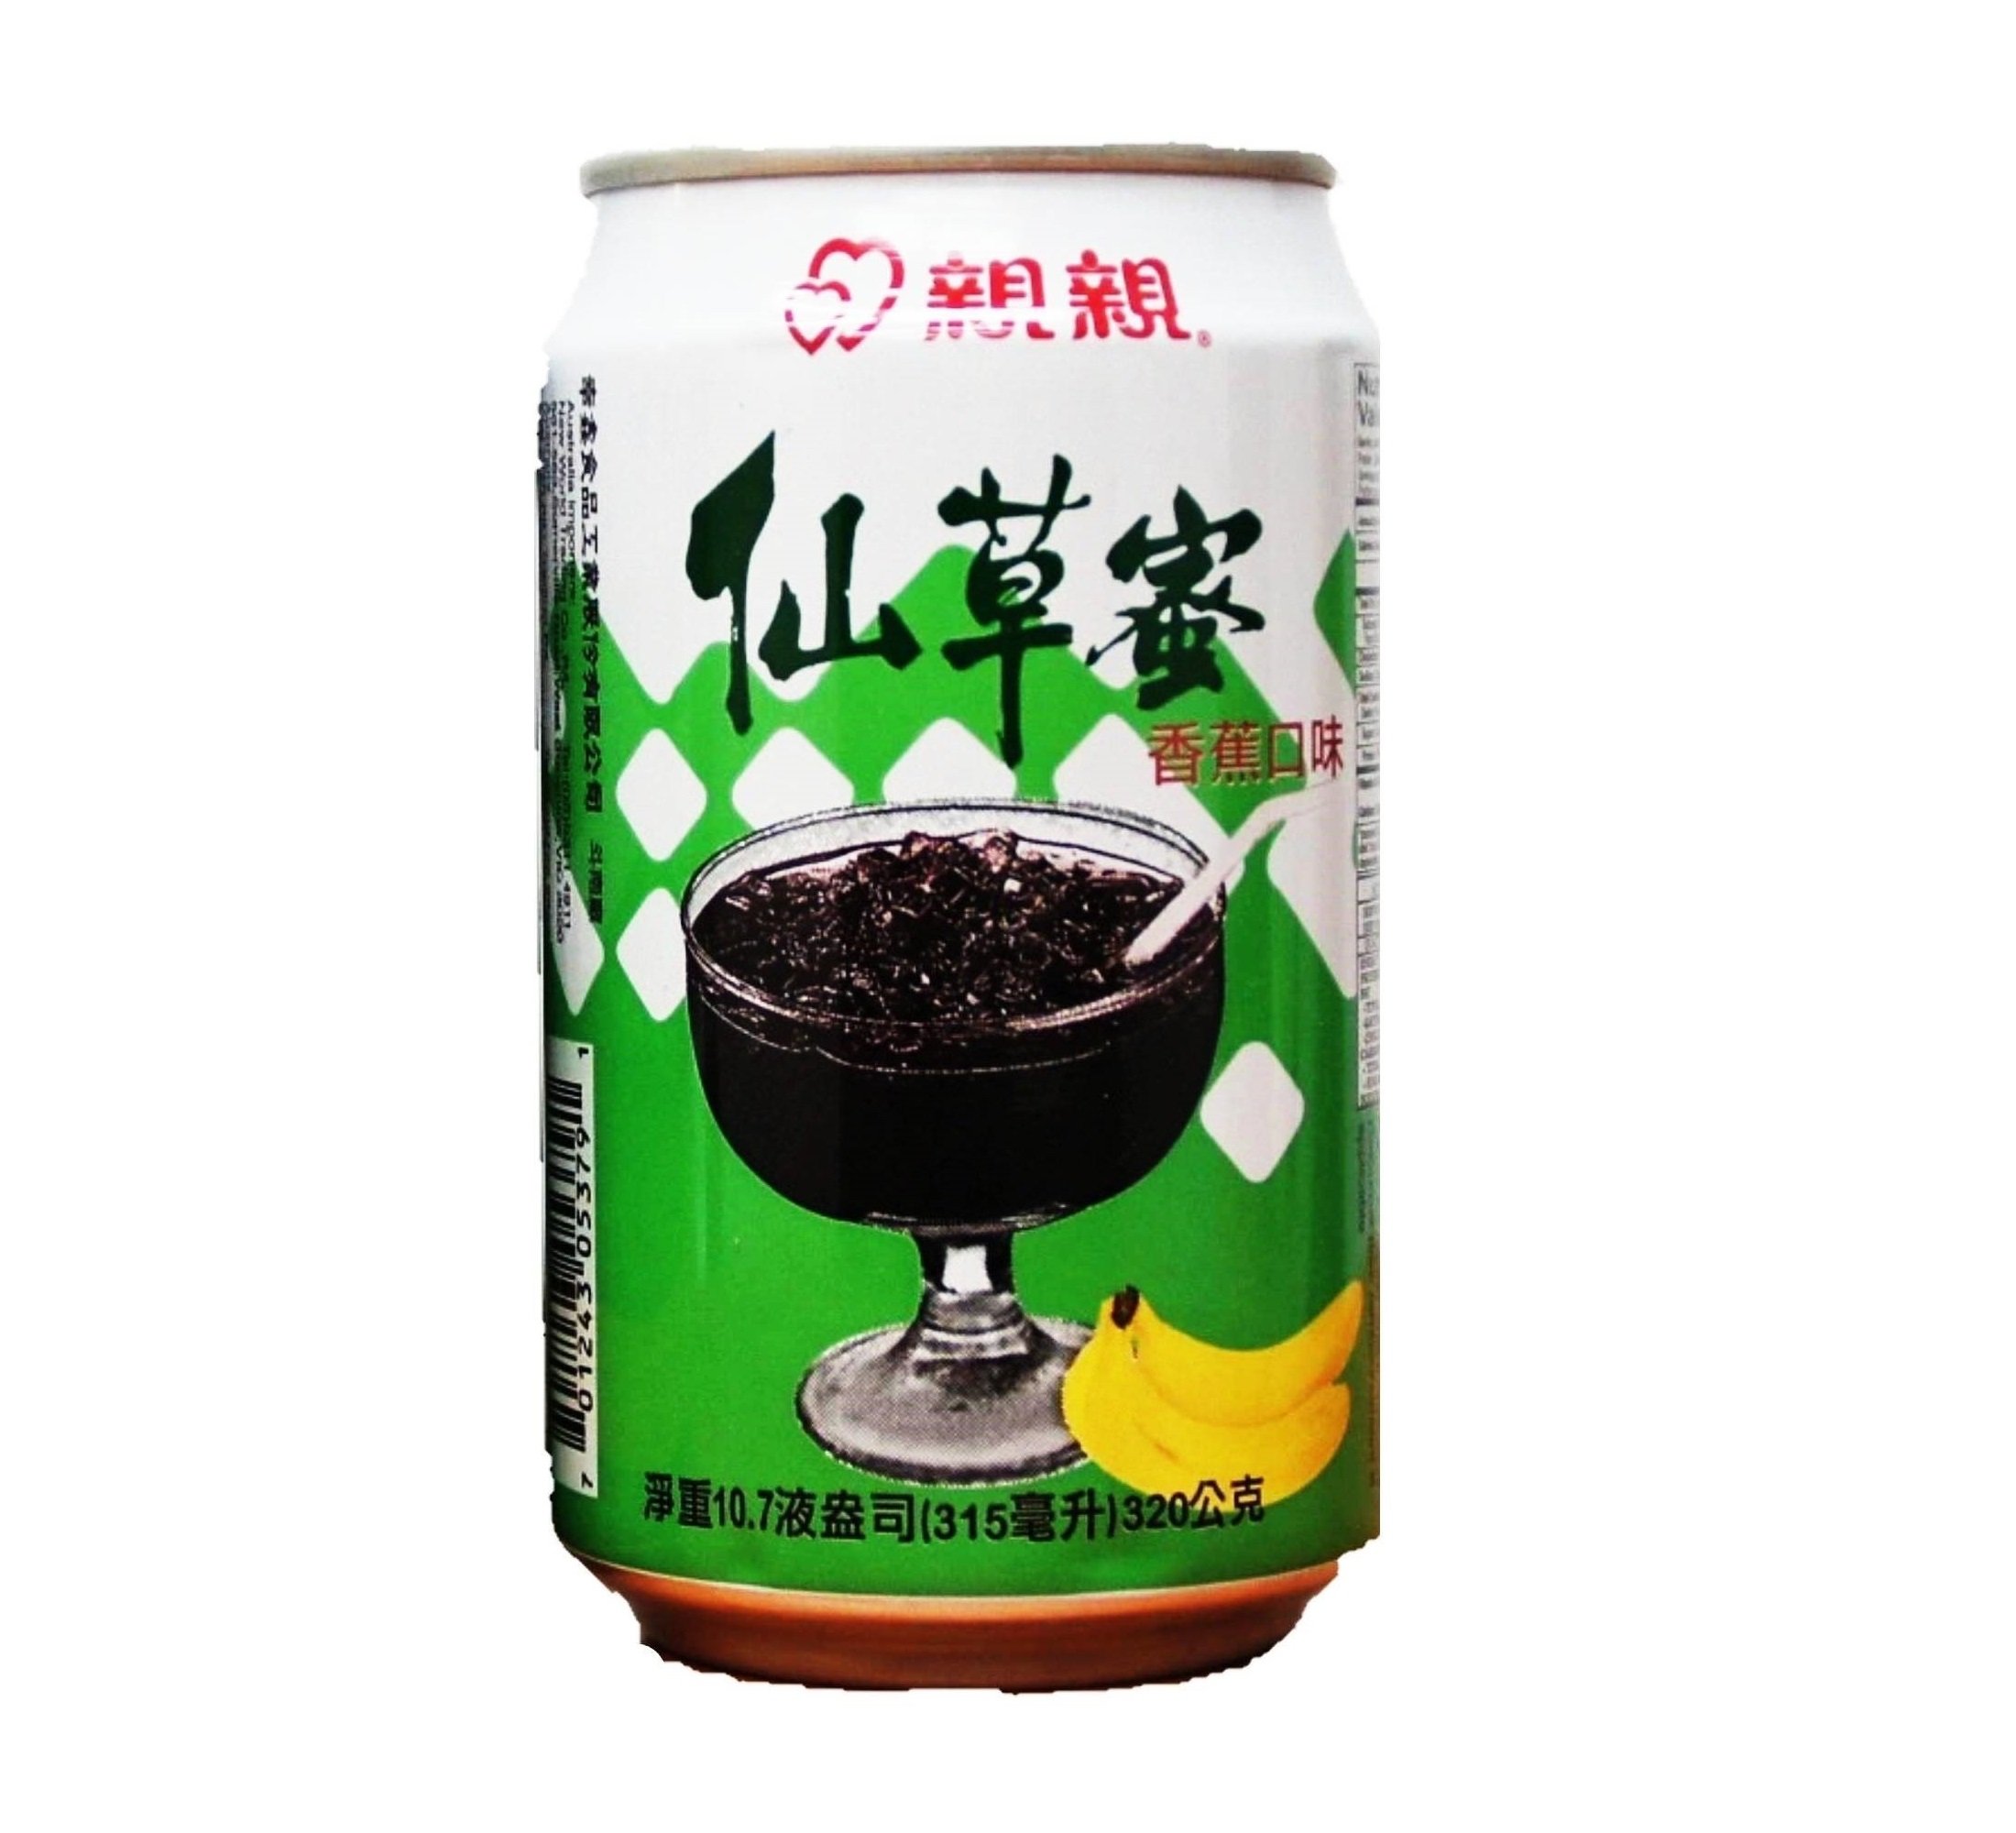 CHIN CHIN BANANA GRASS JELLY DRINK DR110051